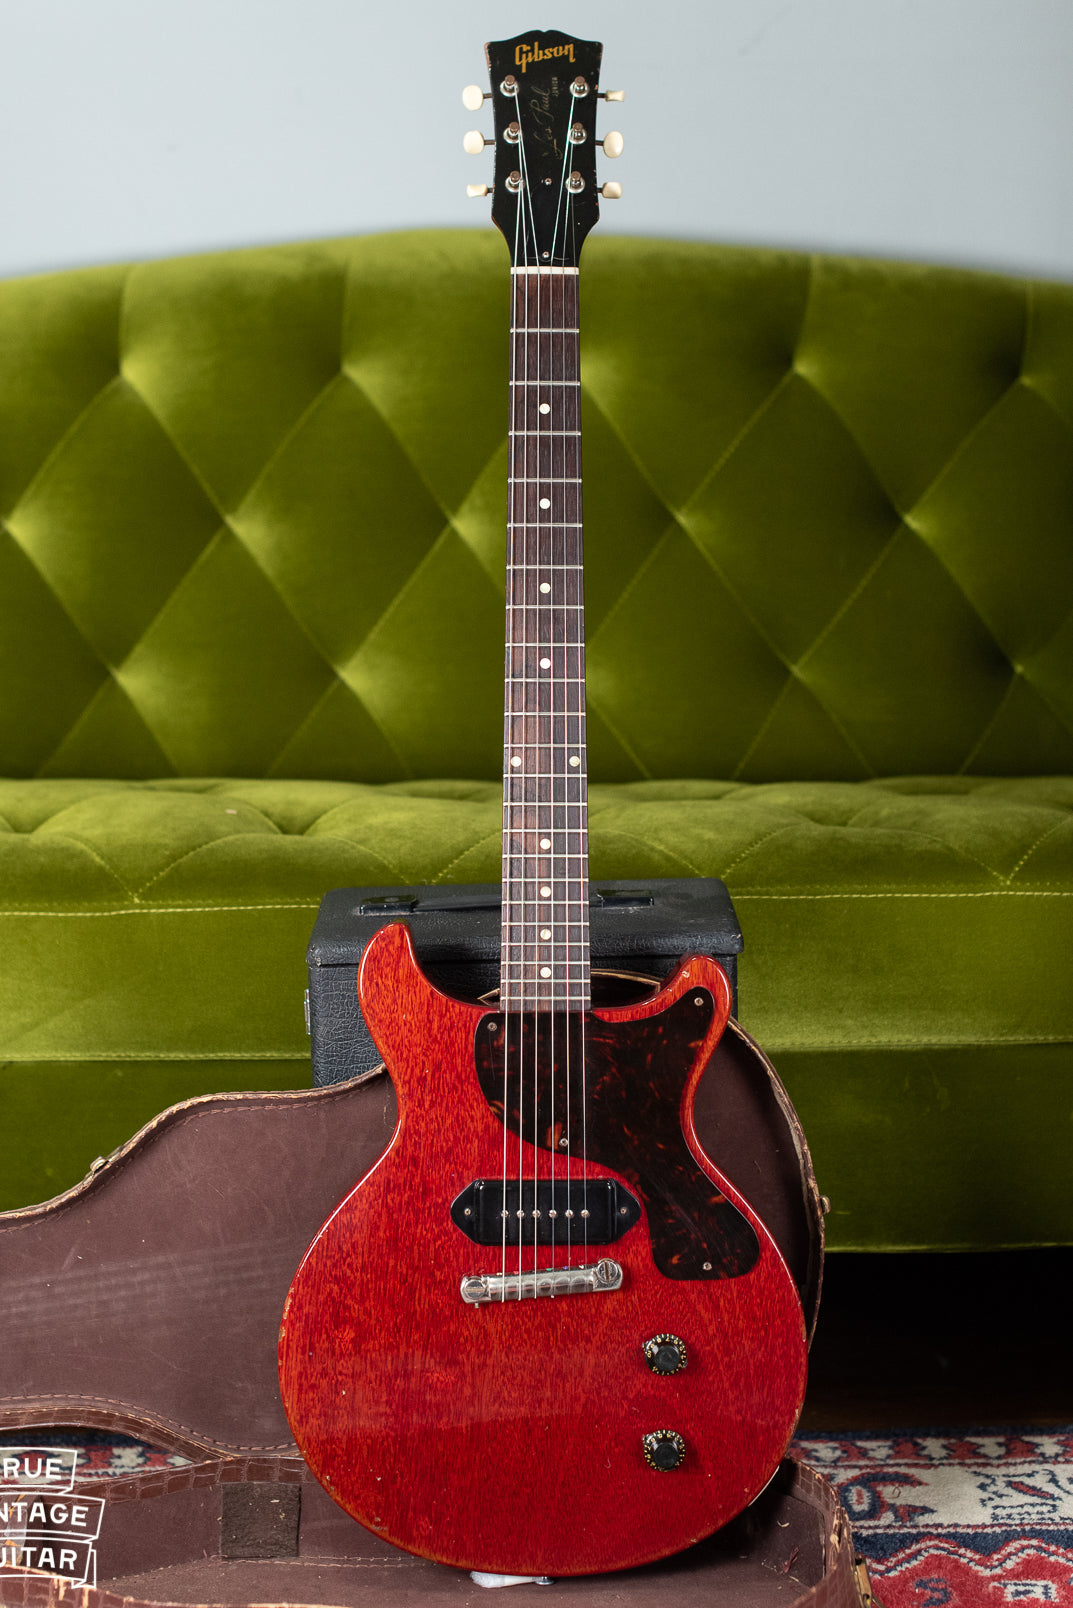 1950s Gibson Les Paul guitar